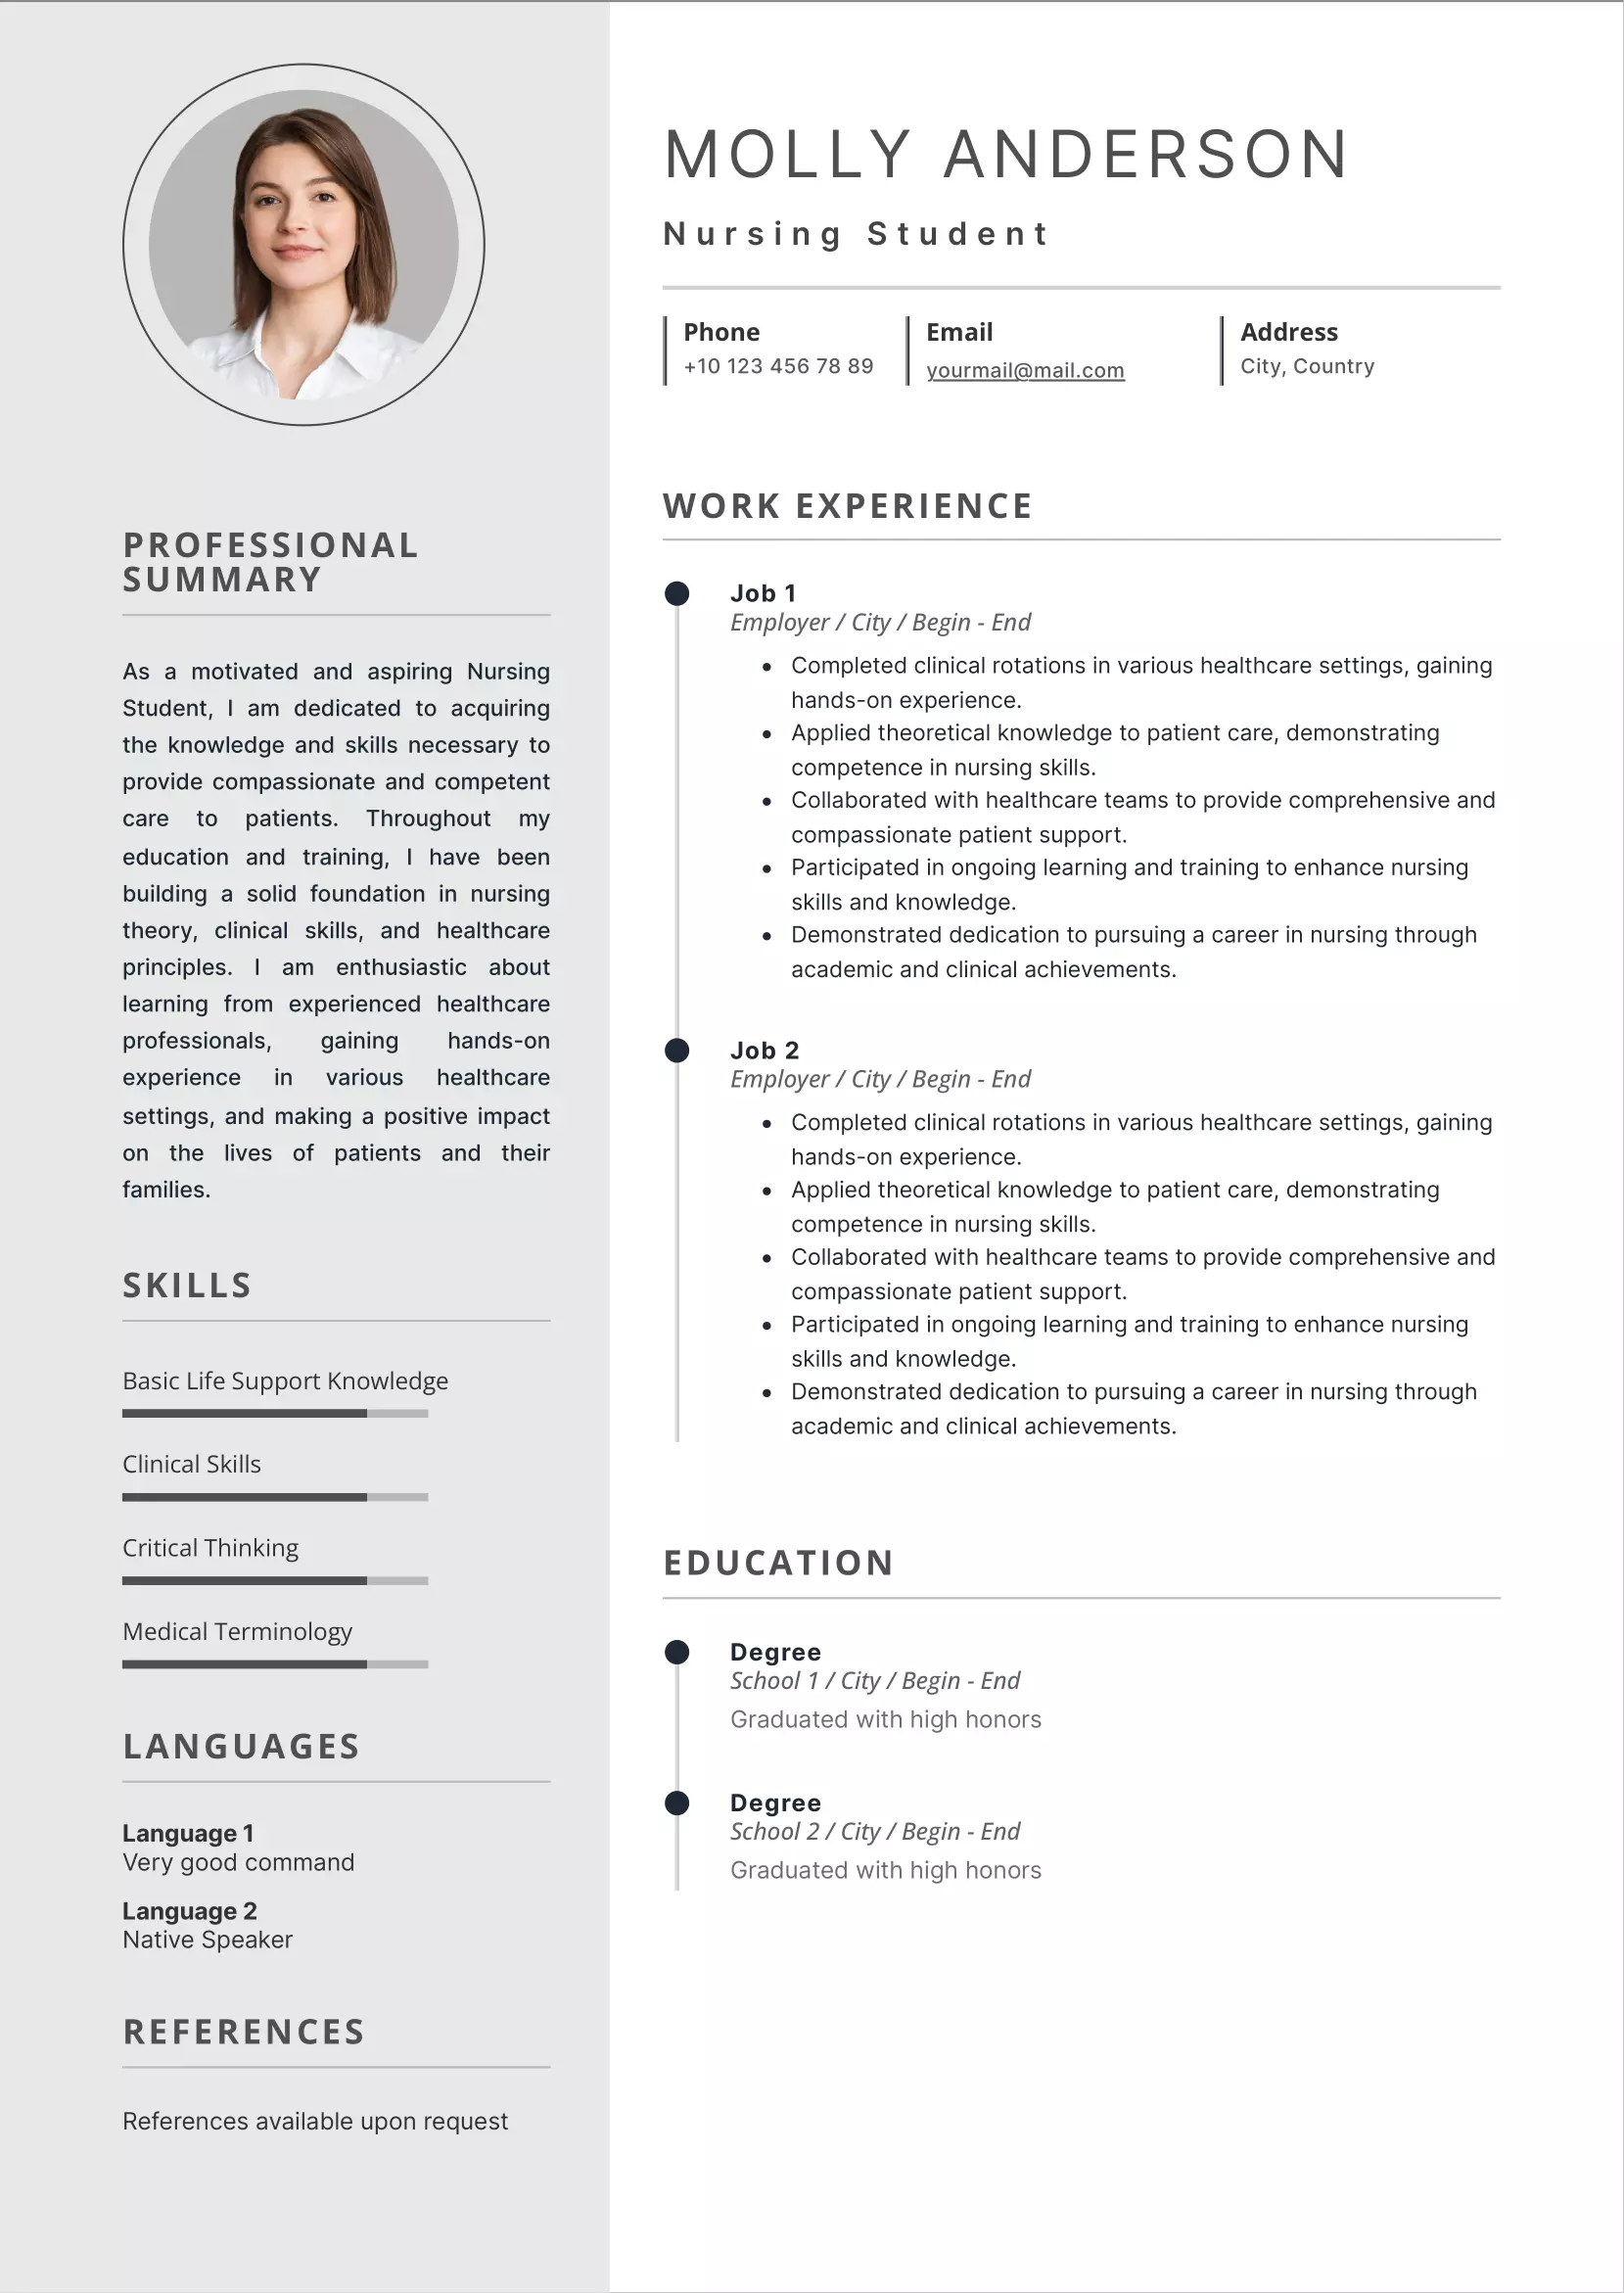 Nursing student resume example CV